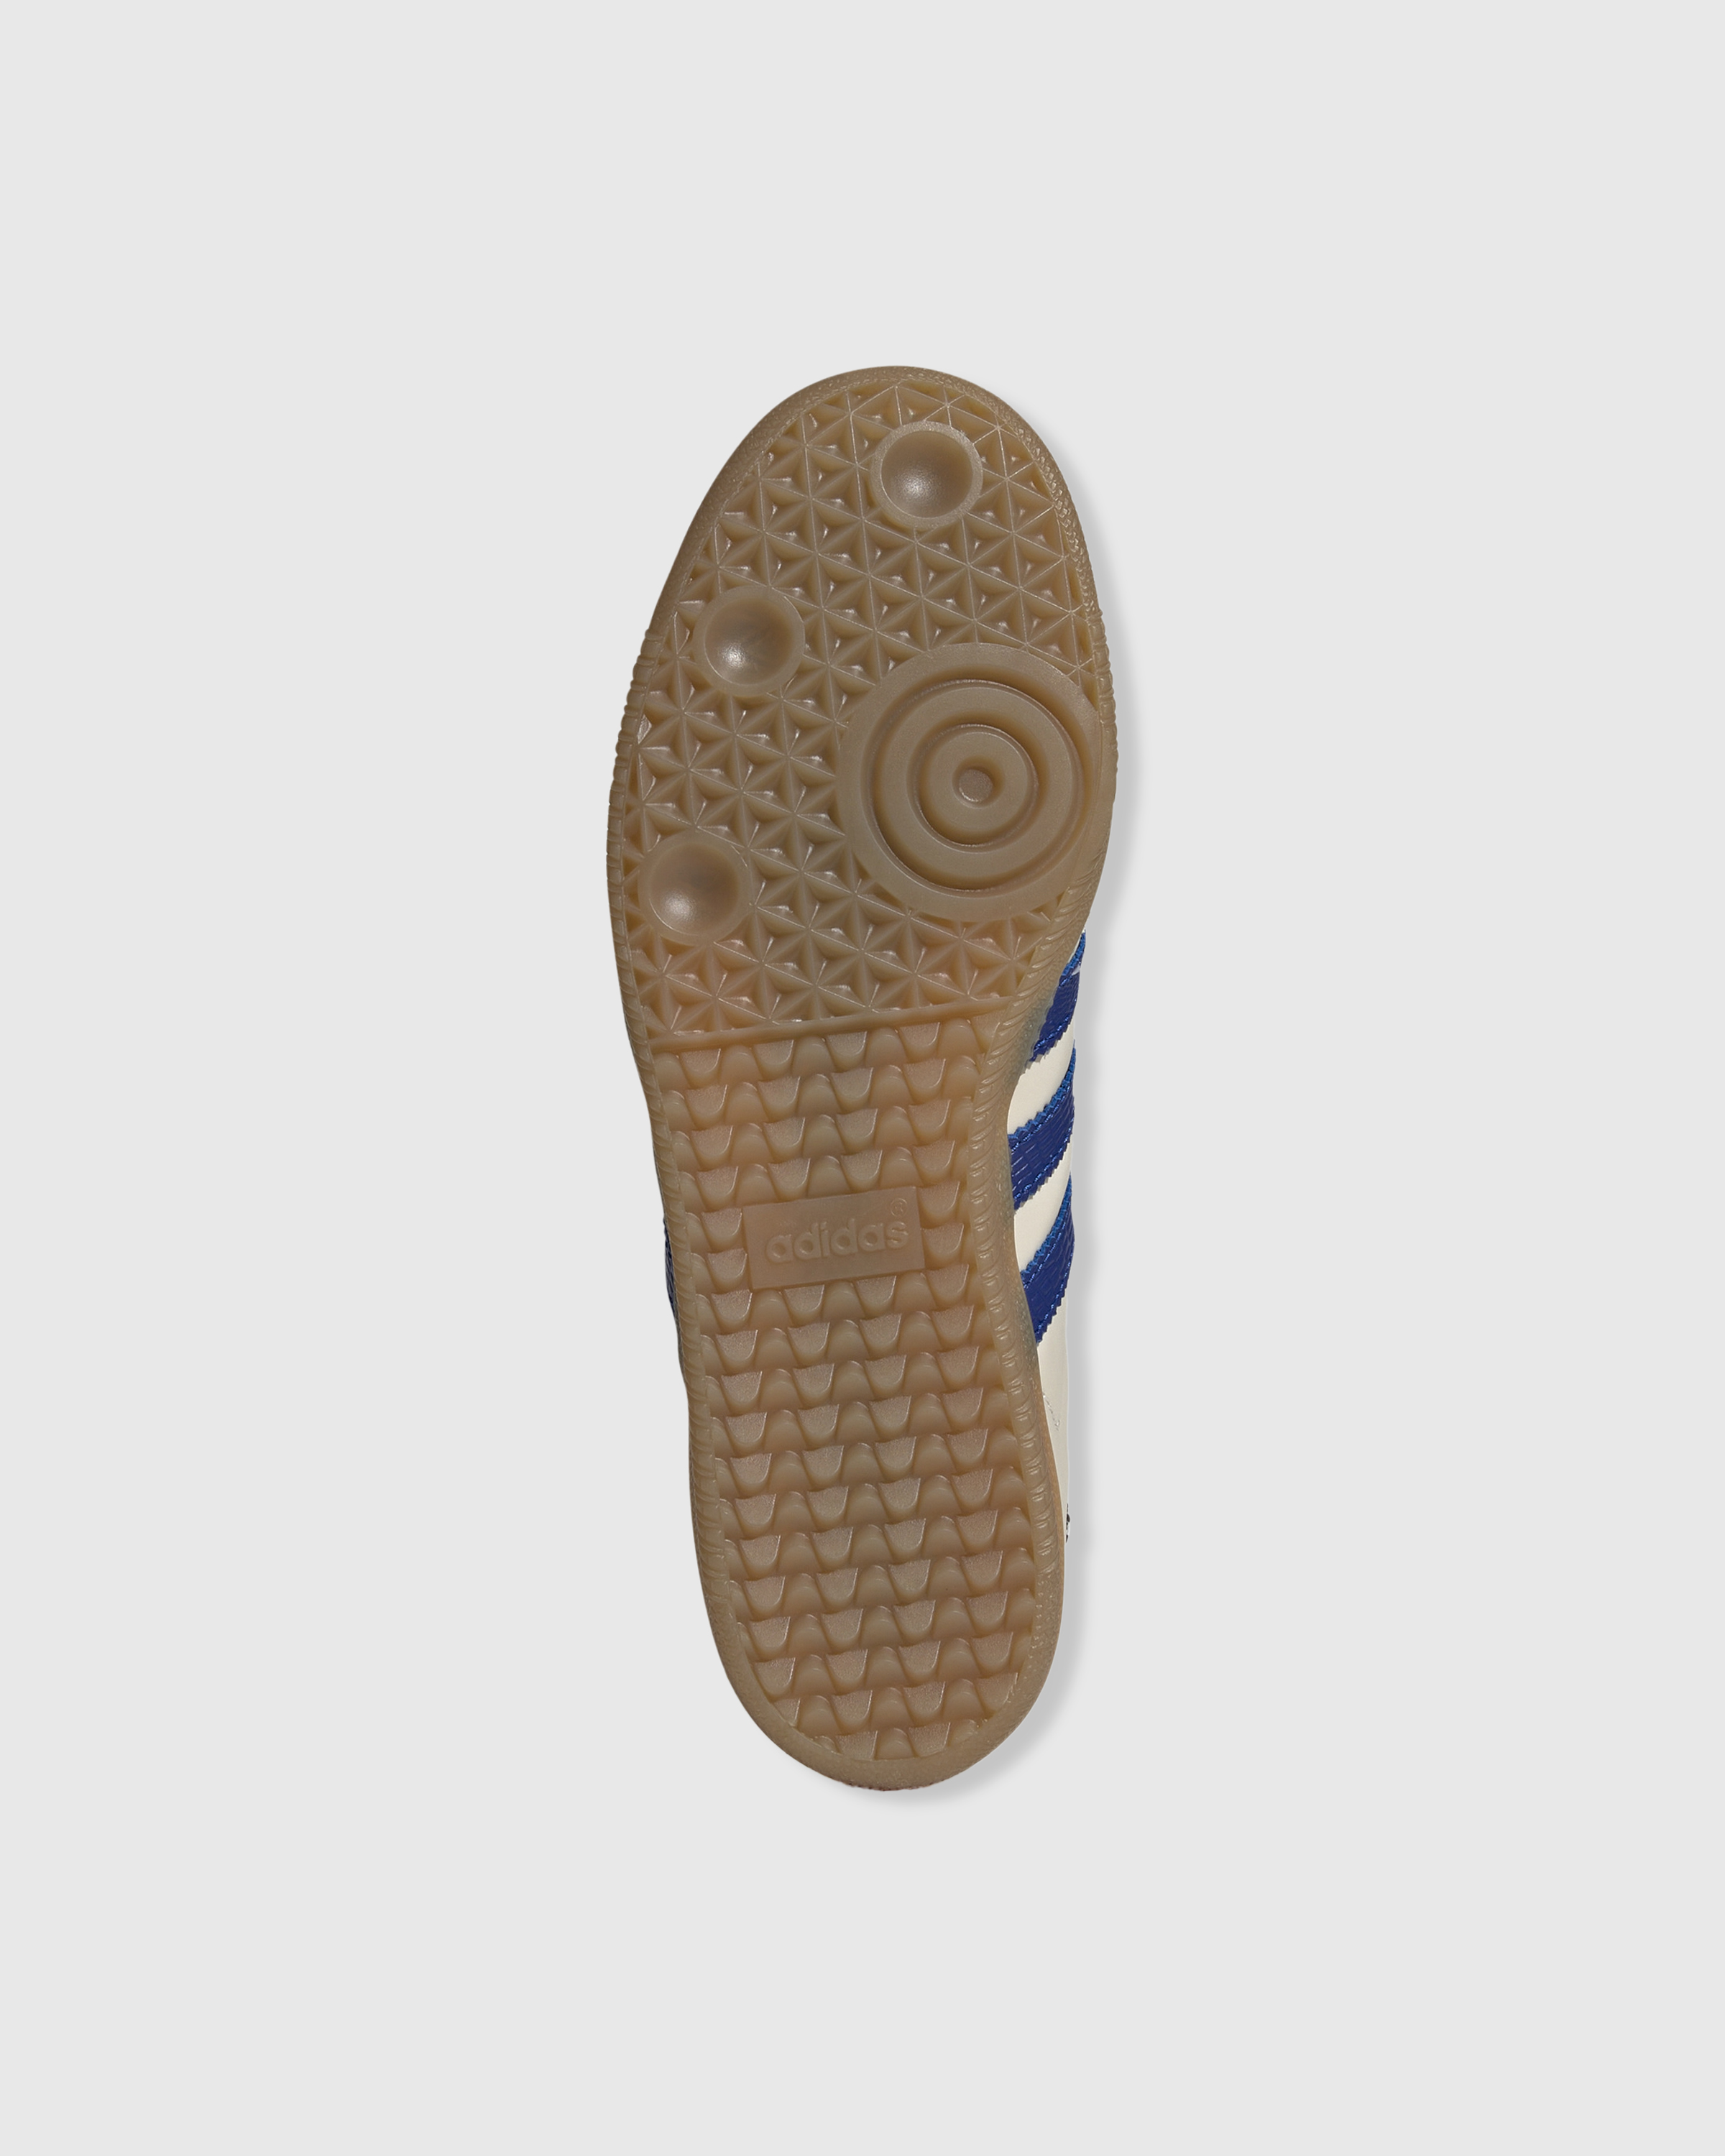 Adidas x Wales Bonner – Samba Cream/Blue - Low Top Sneakers - Beige - Image 7